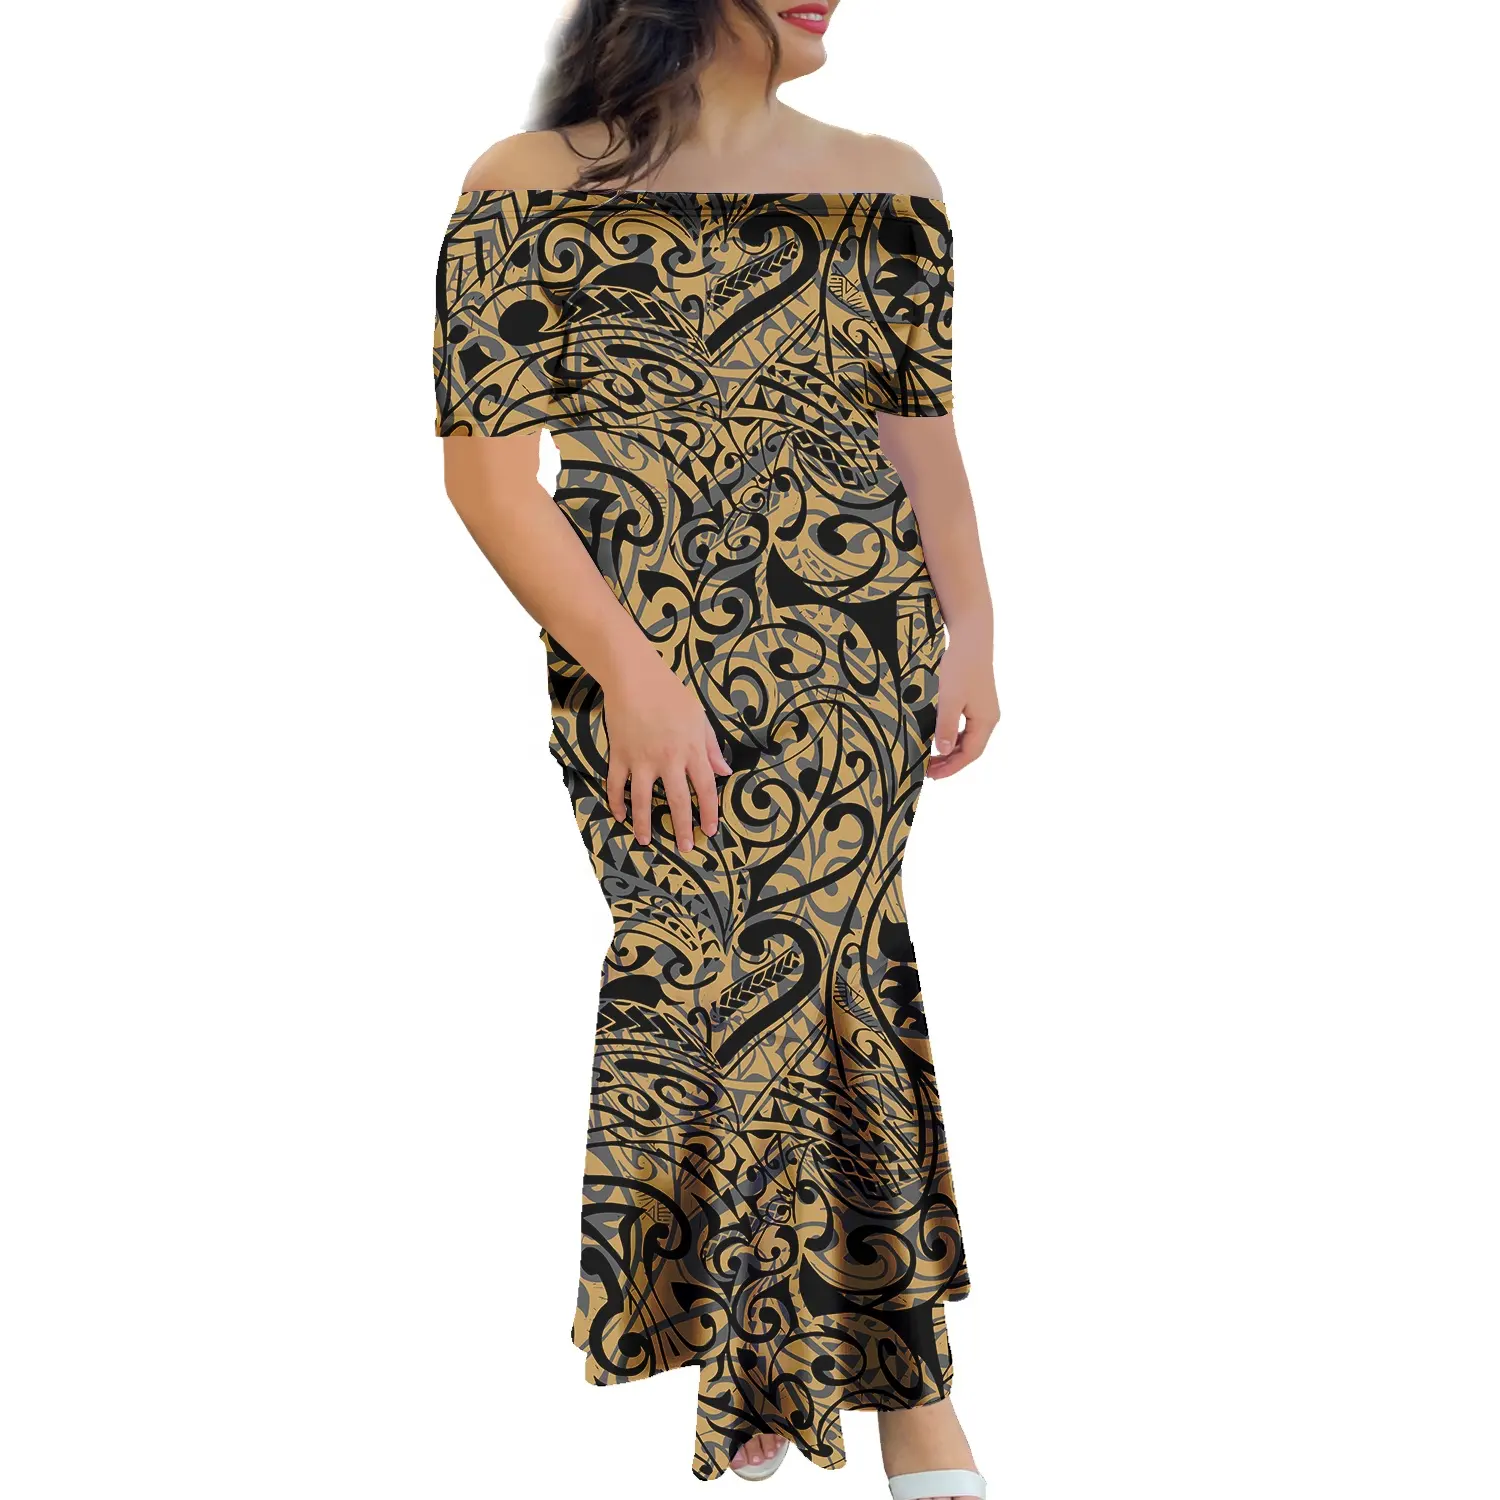 Prezzo all'ingrosso Samoan Tribe Lady Dresses Custom Hawaiian Flower polinesiano manica corta Plus Size donna abito lungo a sirena